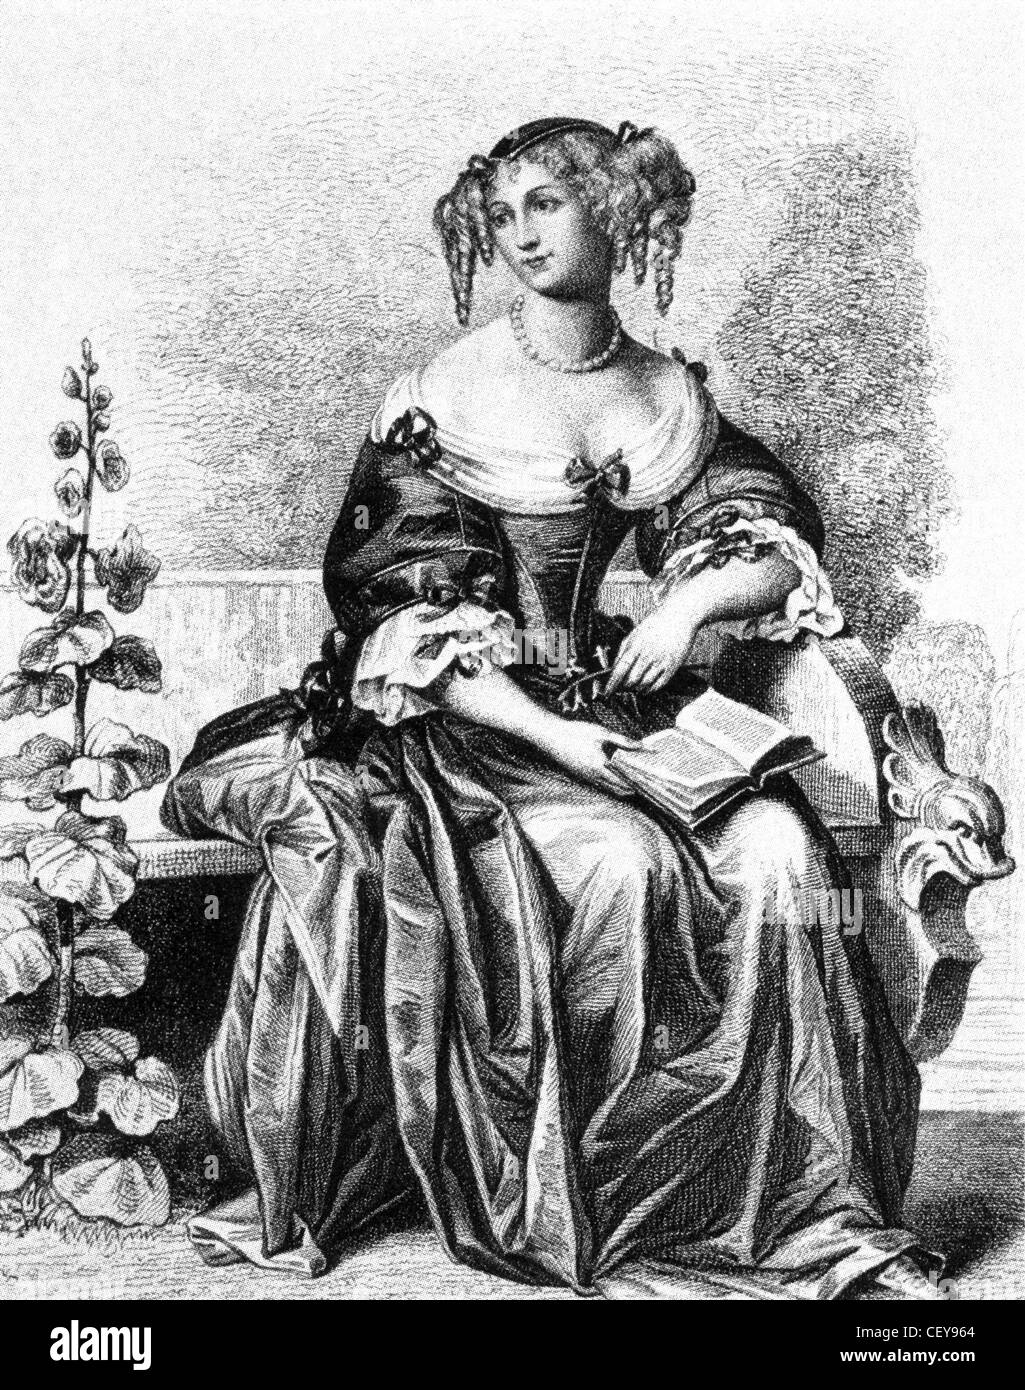 COMTESSE DE LA FAYETTE (1634-1693), scrittore francese meglio conosciuto per la princesse de Kleve Foto Stock